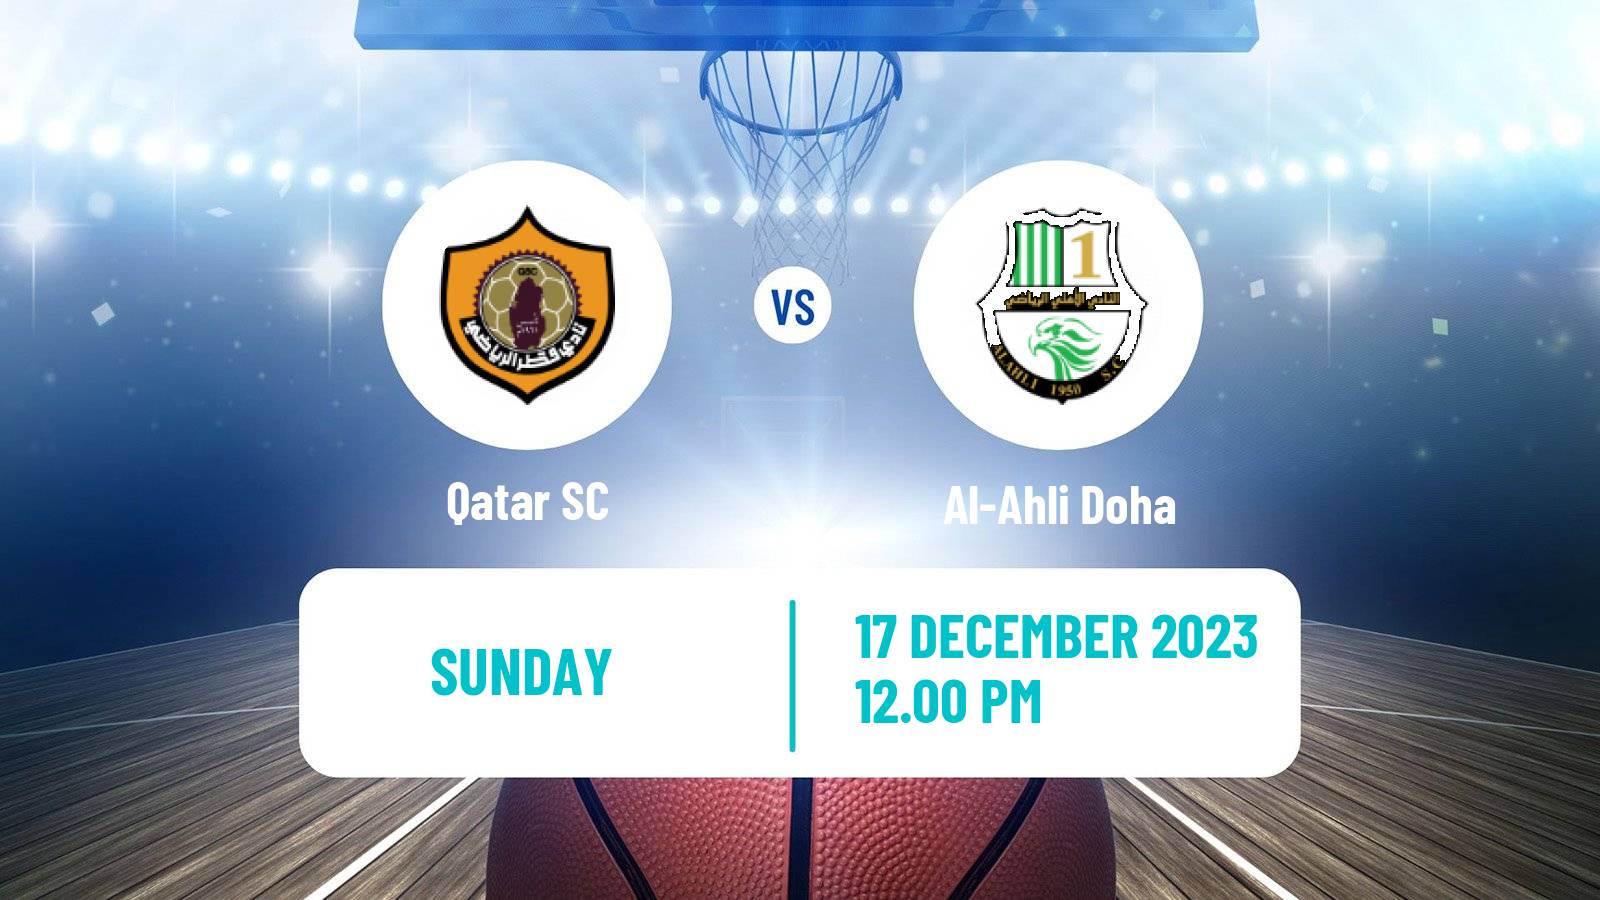 Basketball Qatar Basketball League Qatar SC - Al-Ahli Doha